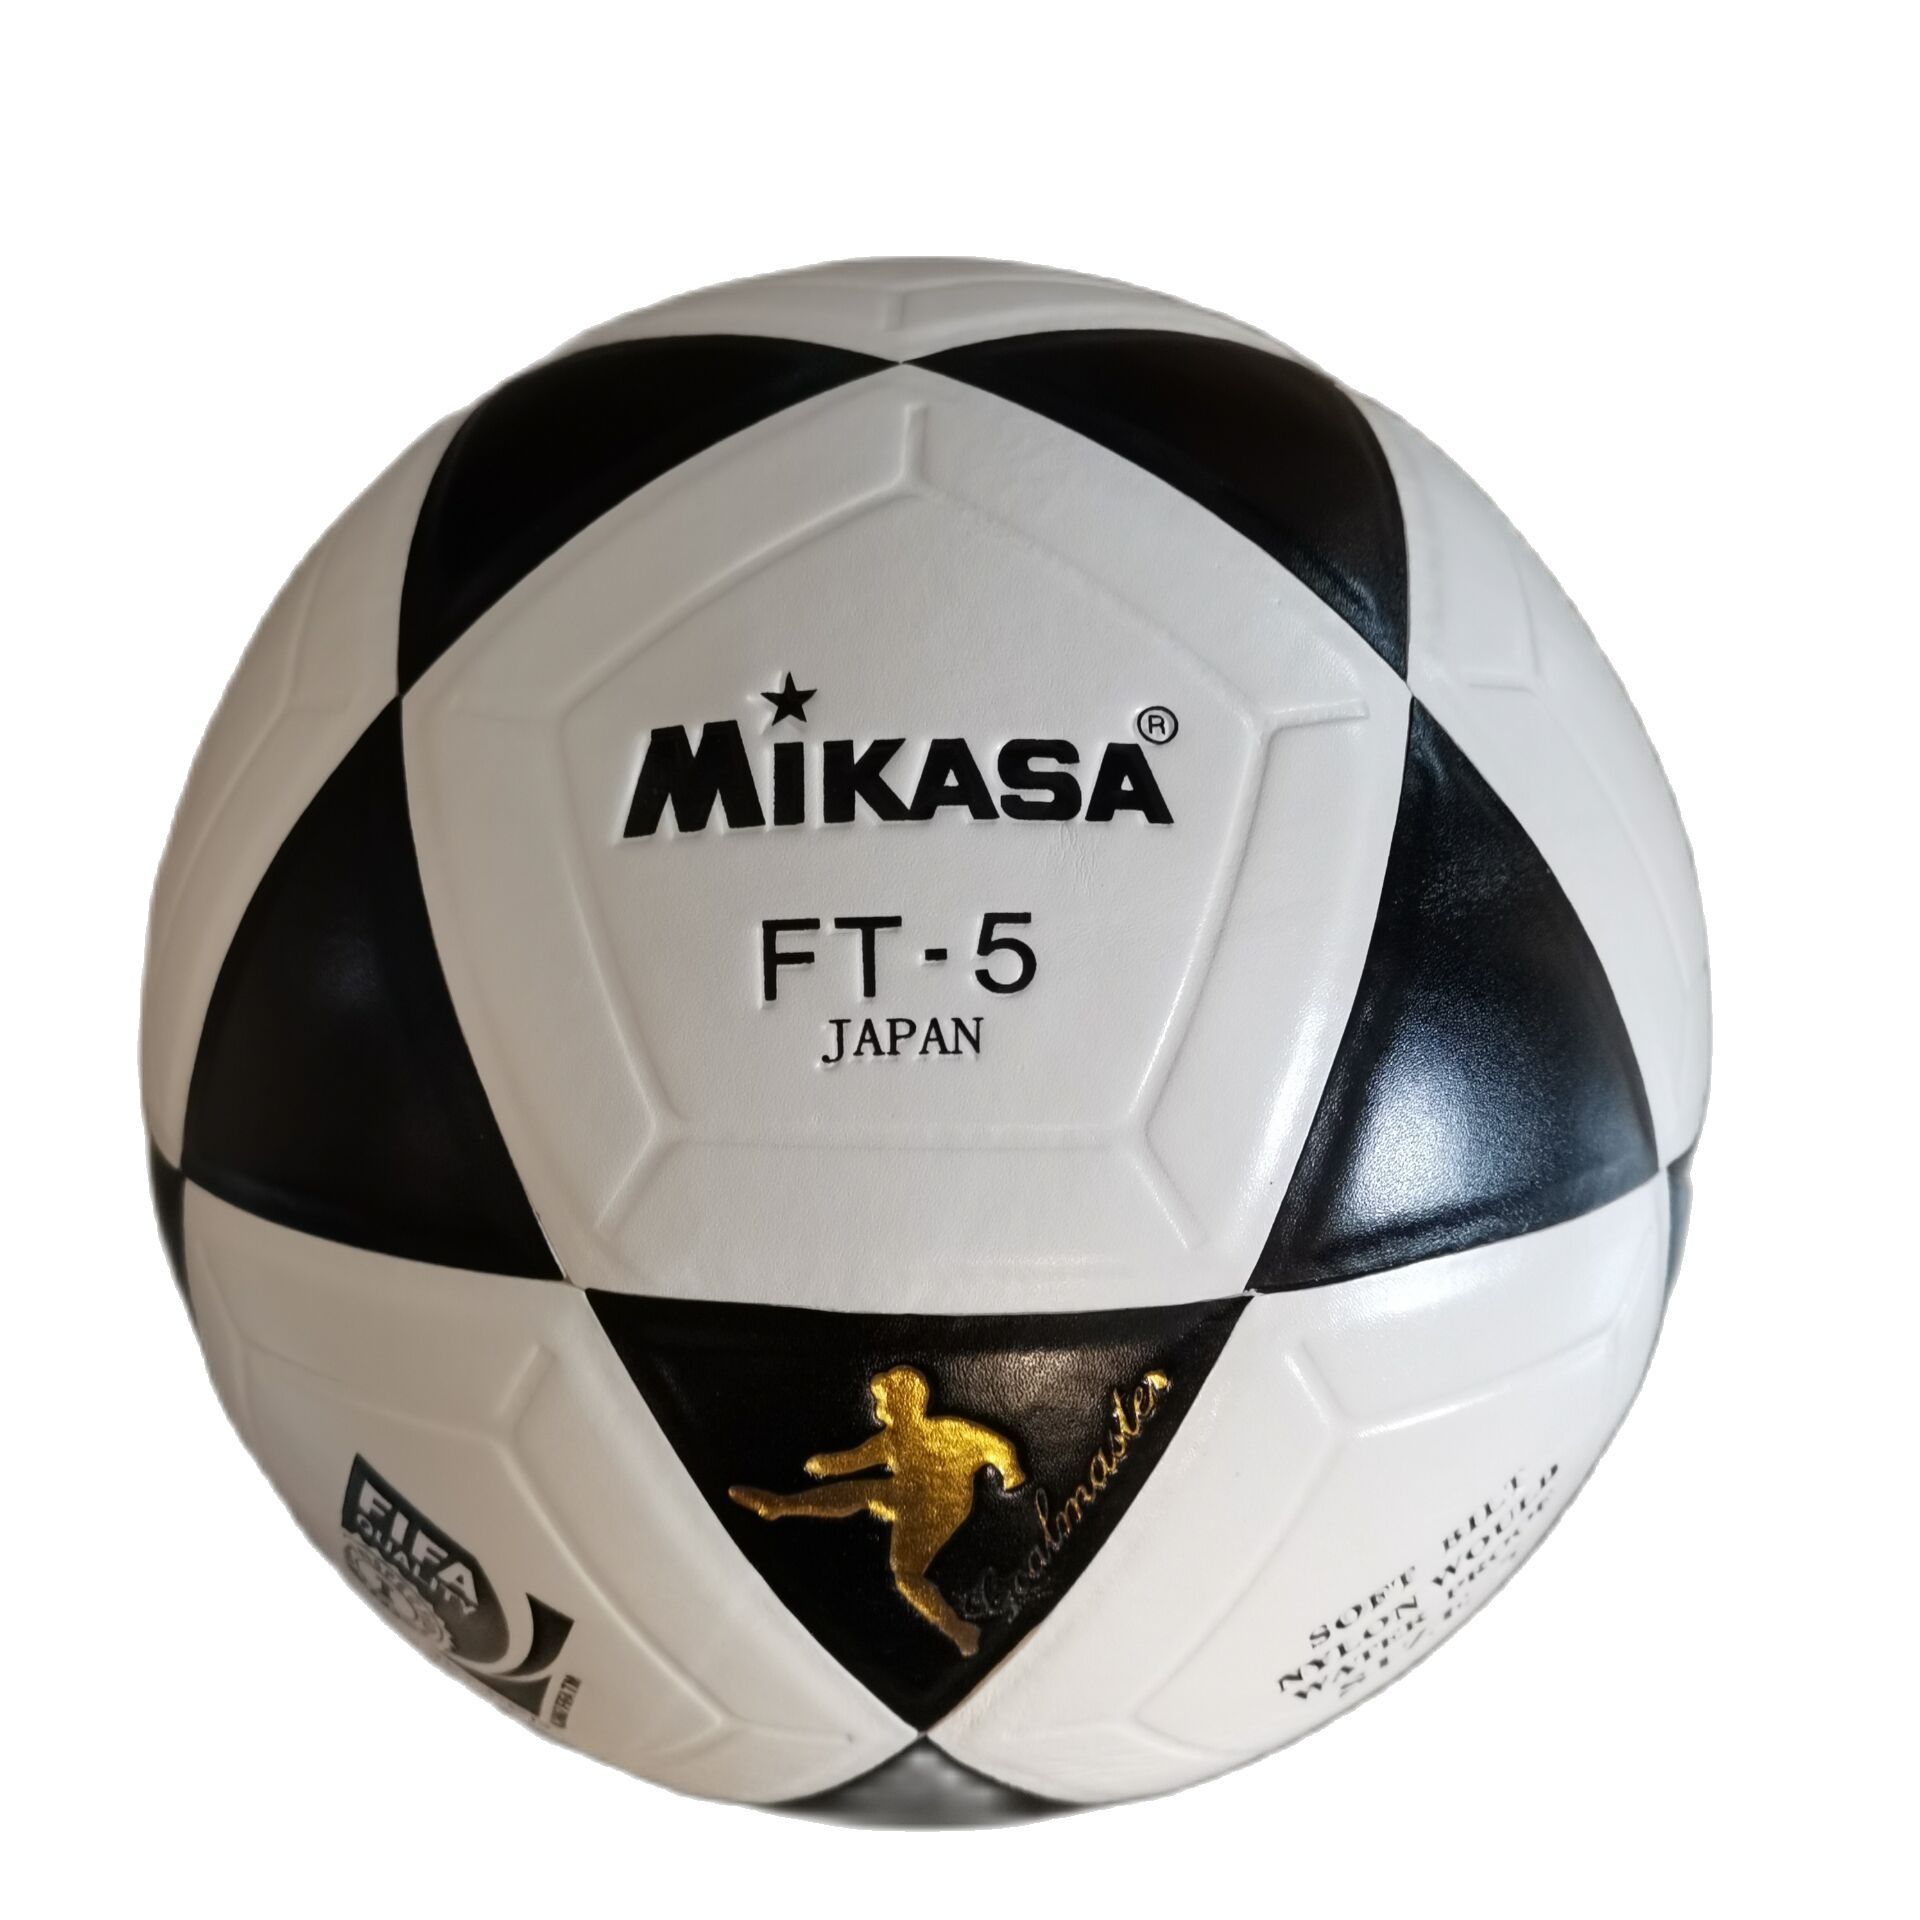 Ballen Bal Pvu League Mikasa Voetbal Sport Maat Bal Doel 5 Voetbal Outdoor Een Training Voetbal Pvu Voetbal maat 5 F